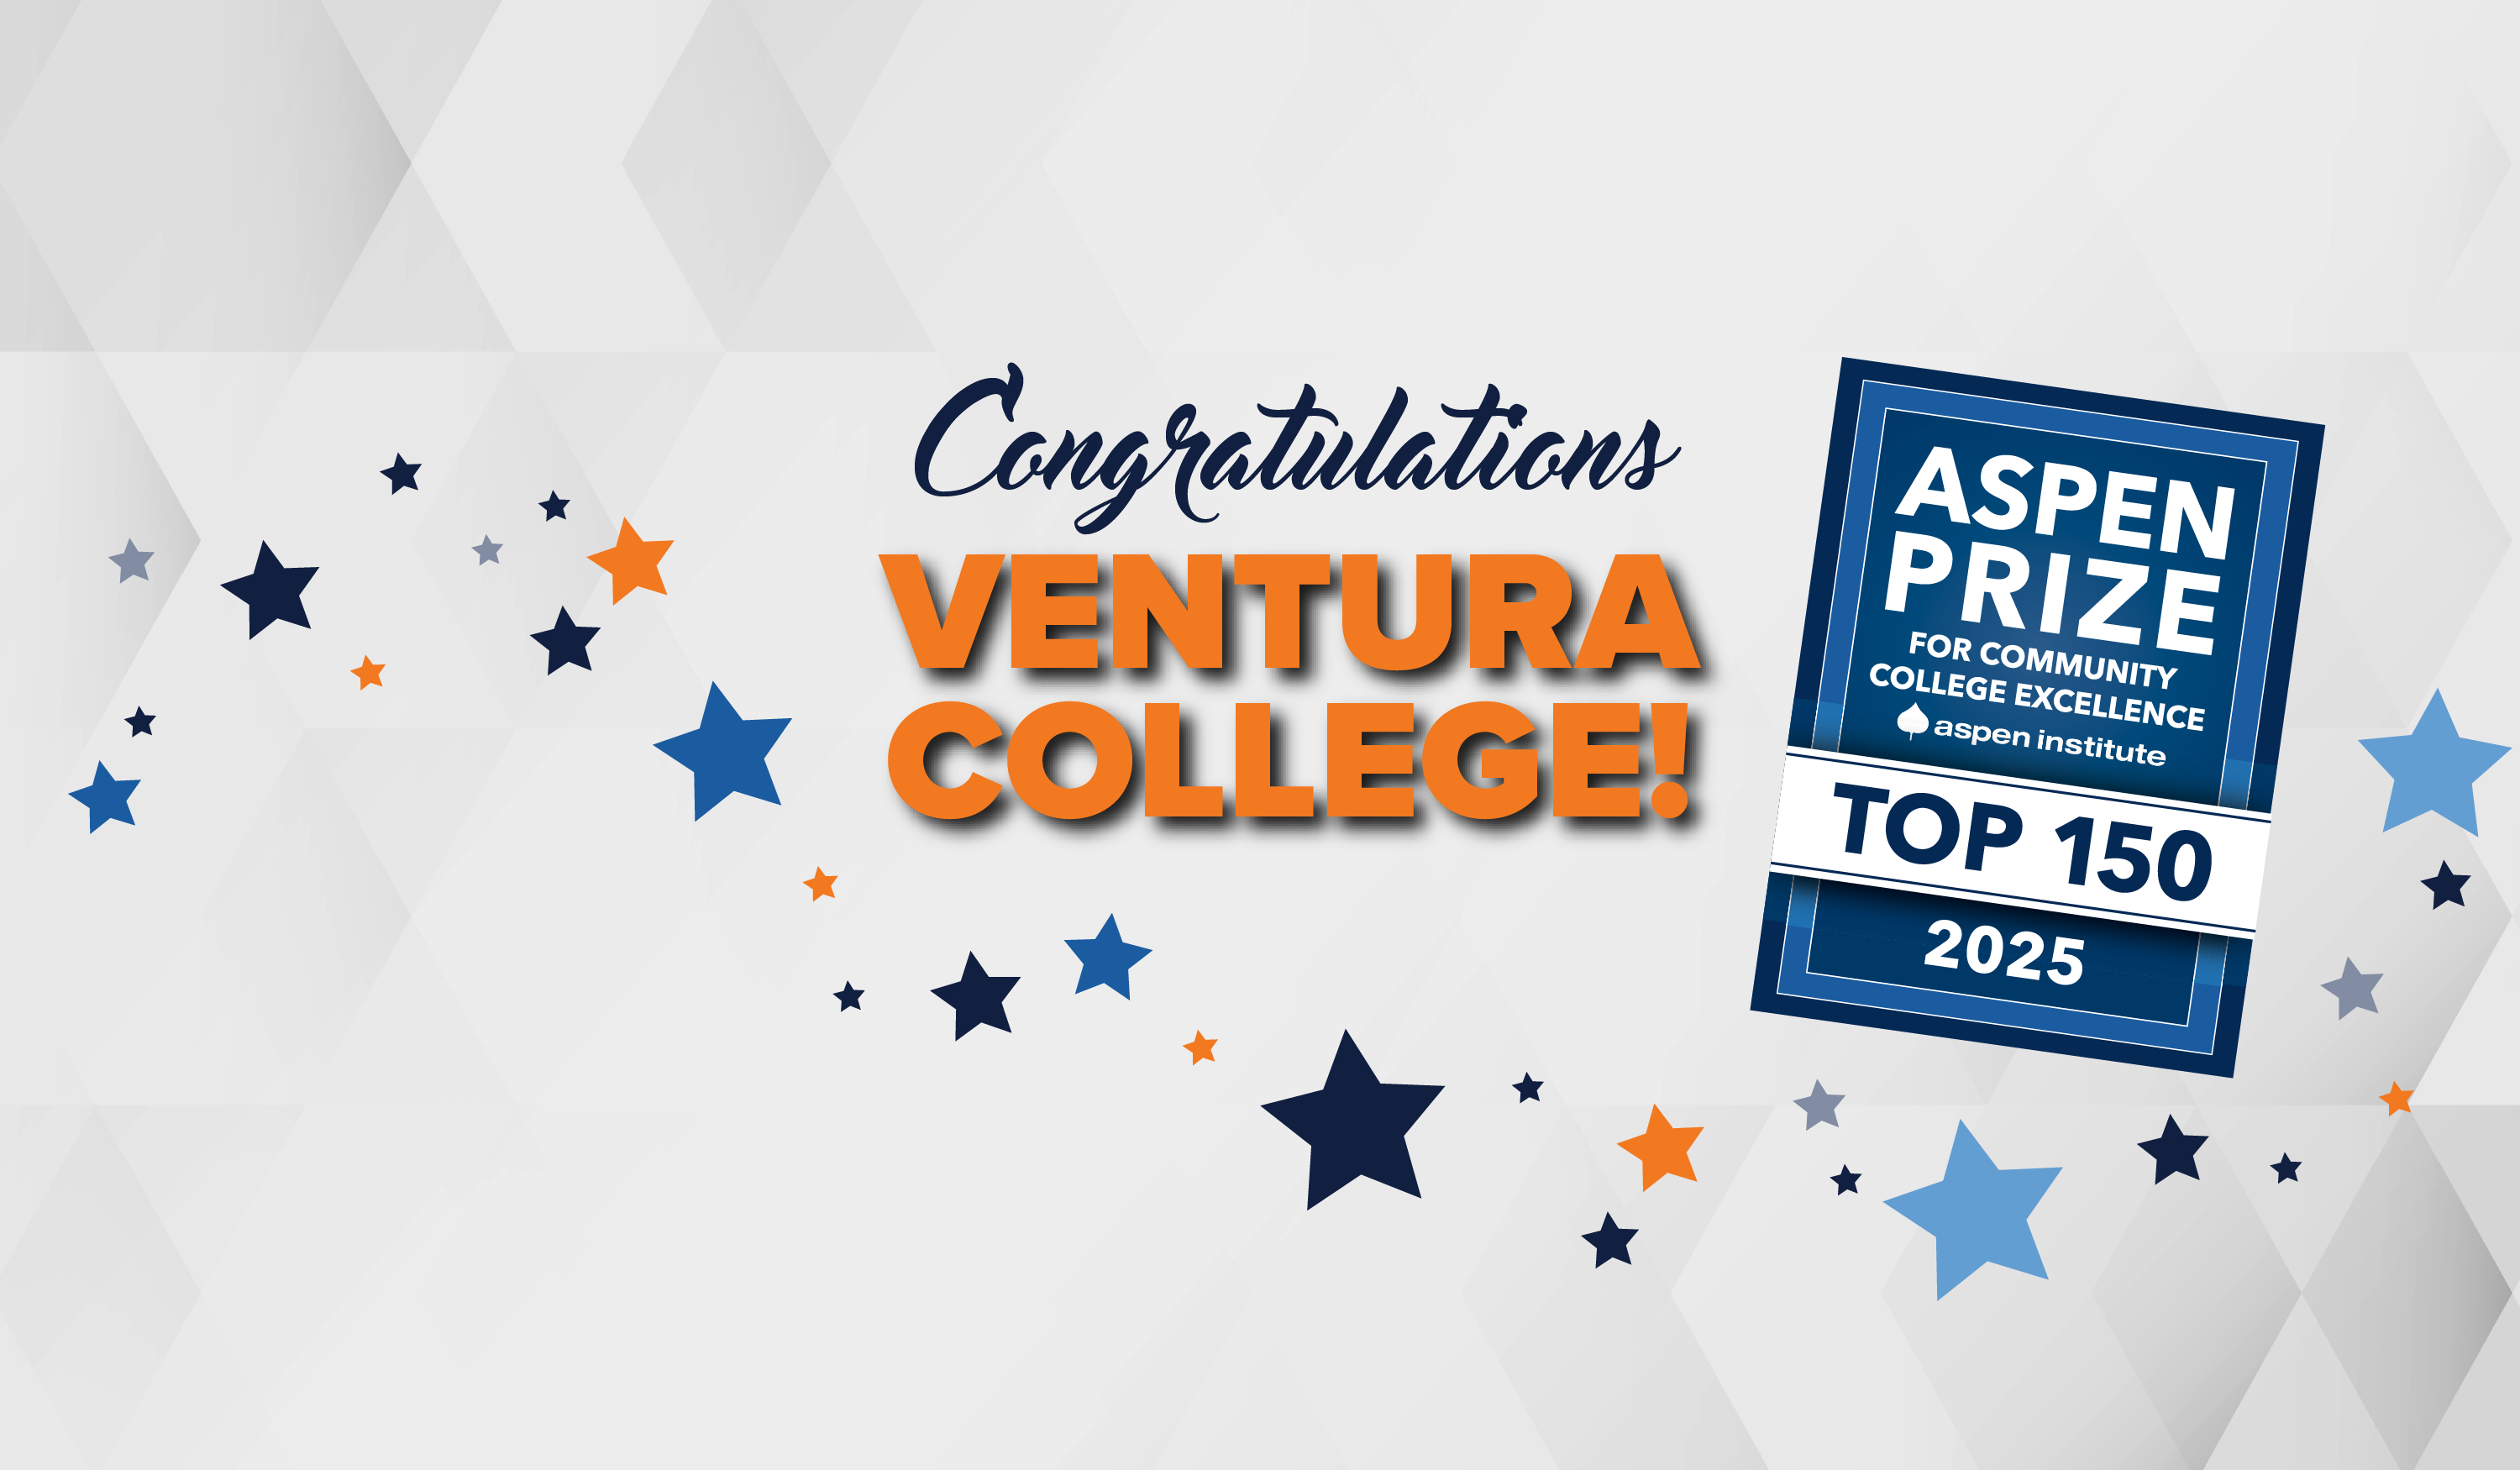 congratulations ventura college, aspen prize for community college excellence aspen institute top 150 2025